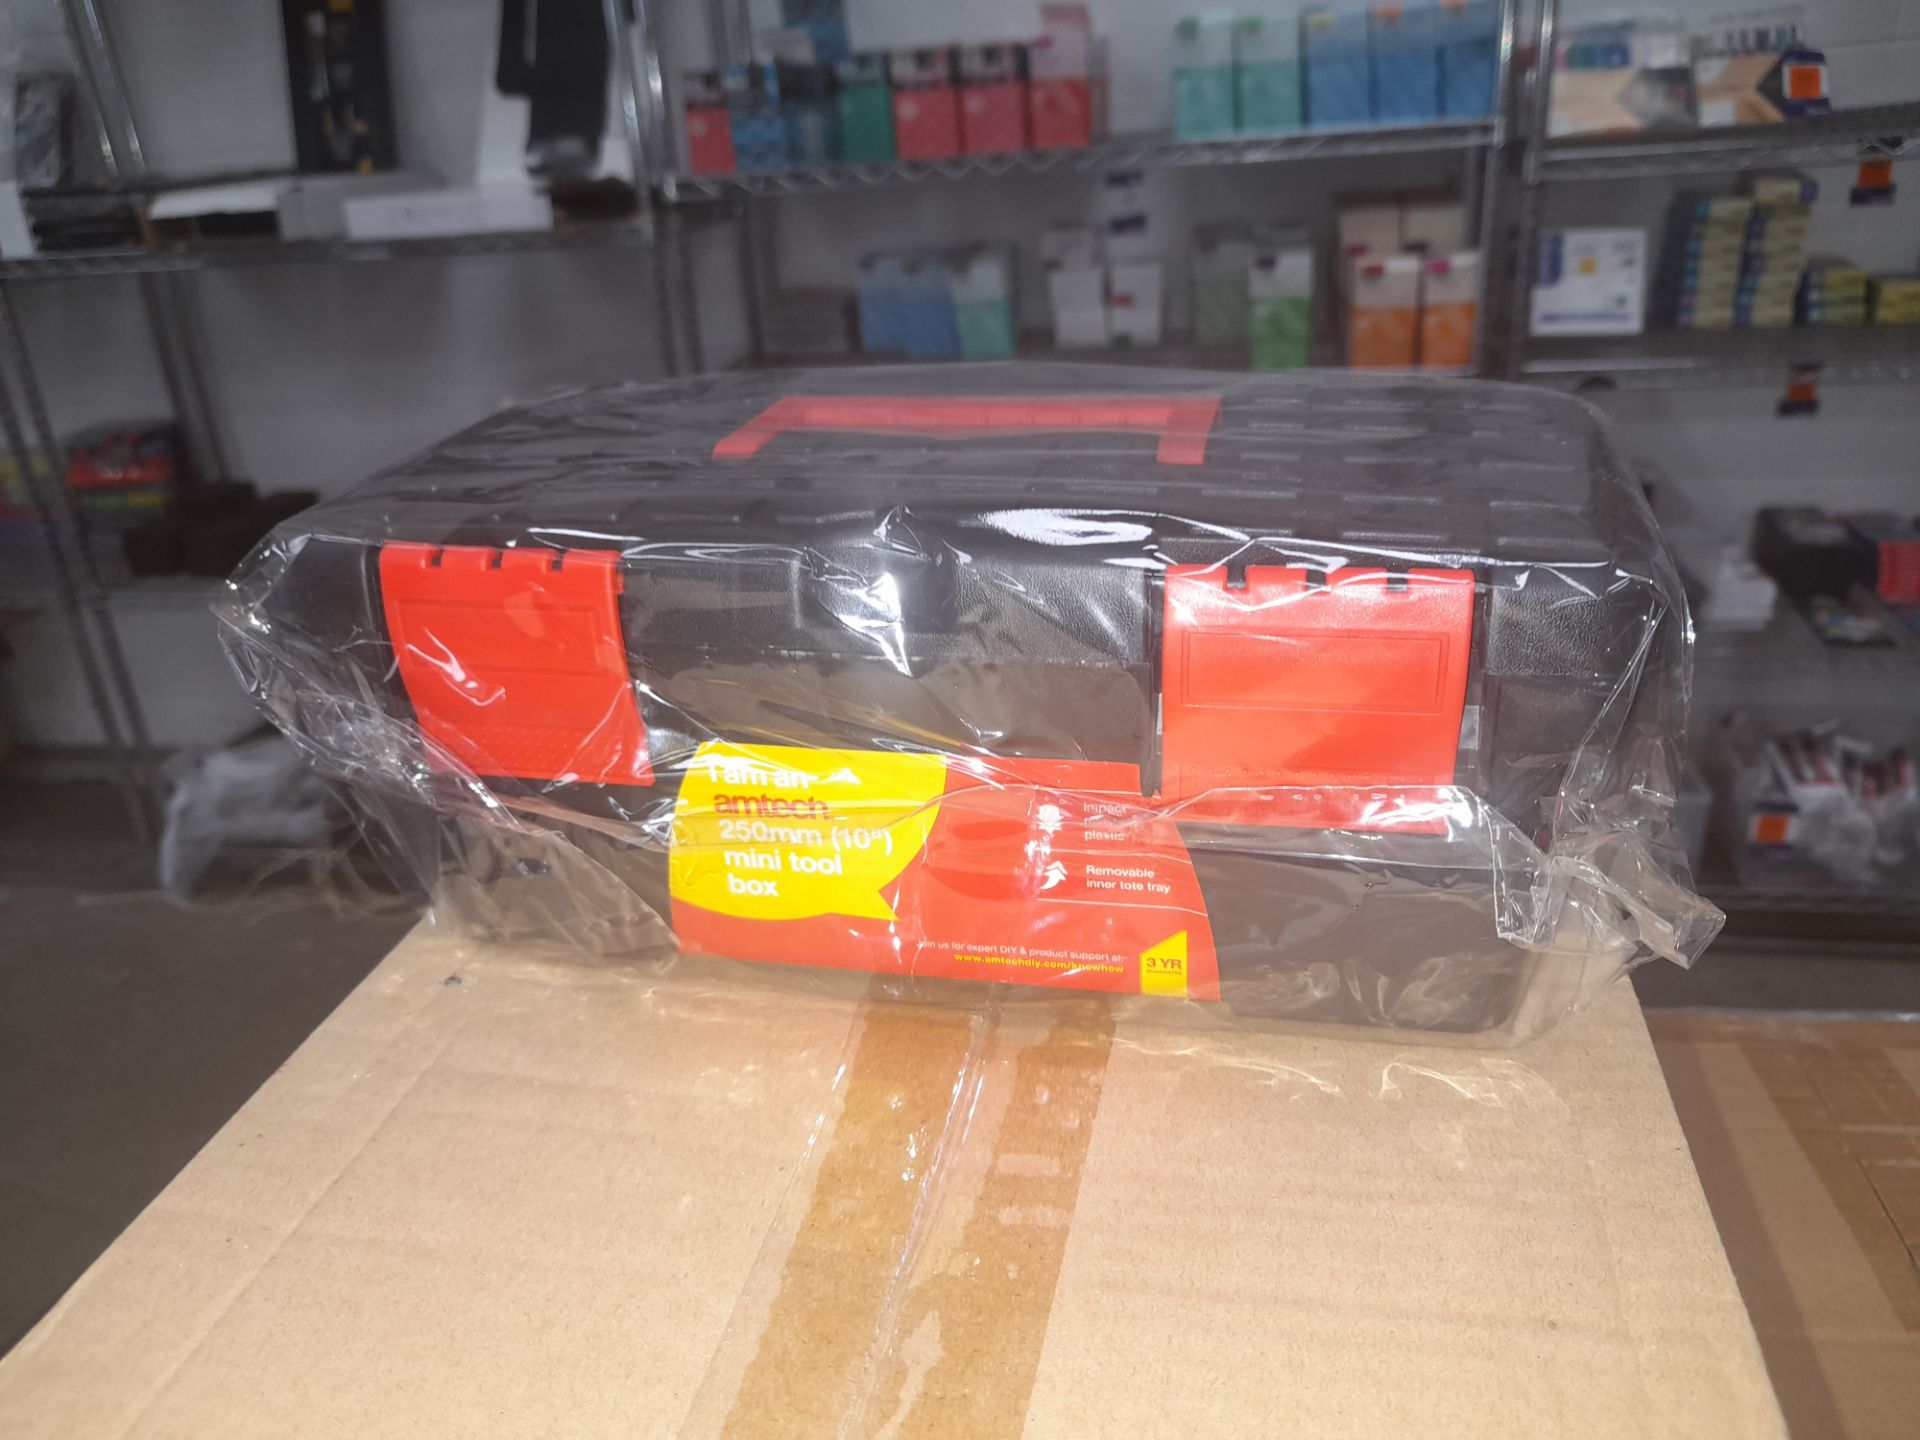 1 x Box of Amtech 10” Multi Plastic Mini Toolboxes (2 x cartons per box, 10 x tool boxes per carton, - Image 2 of 2